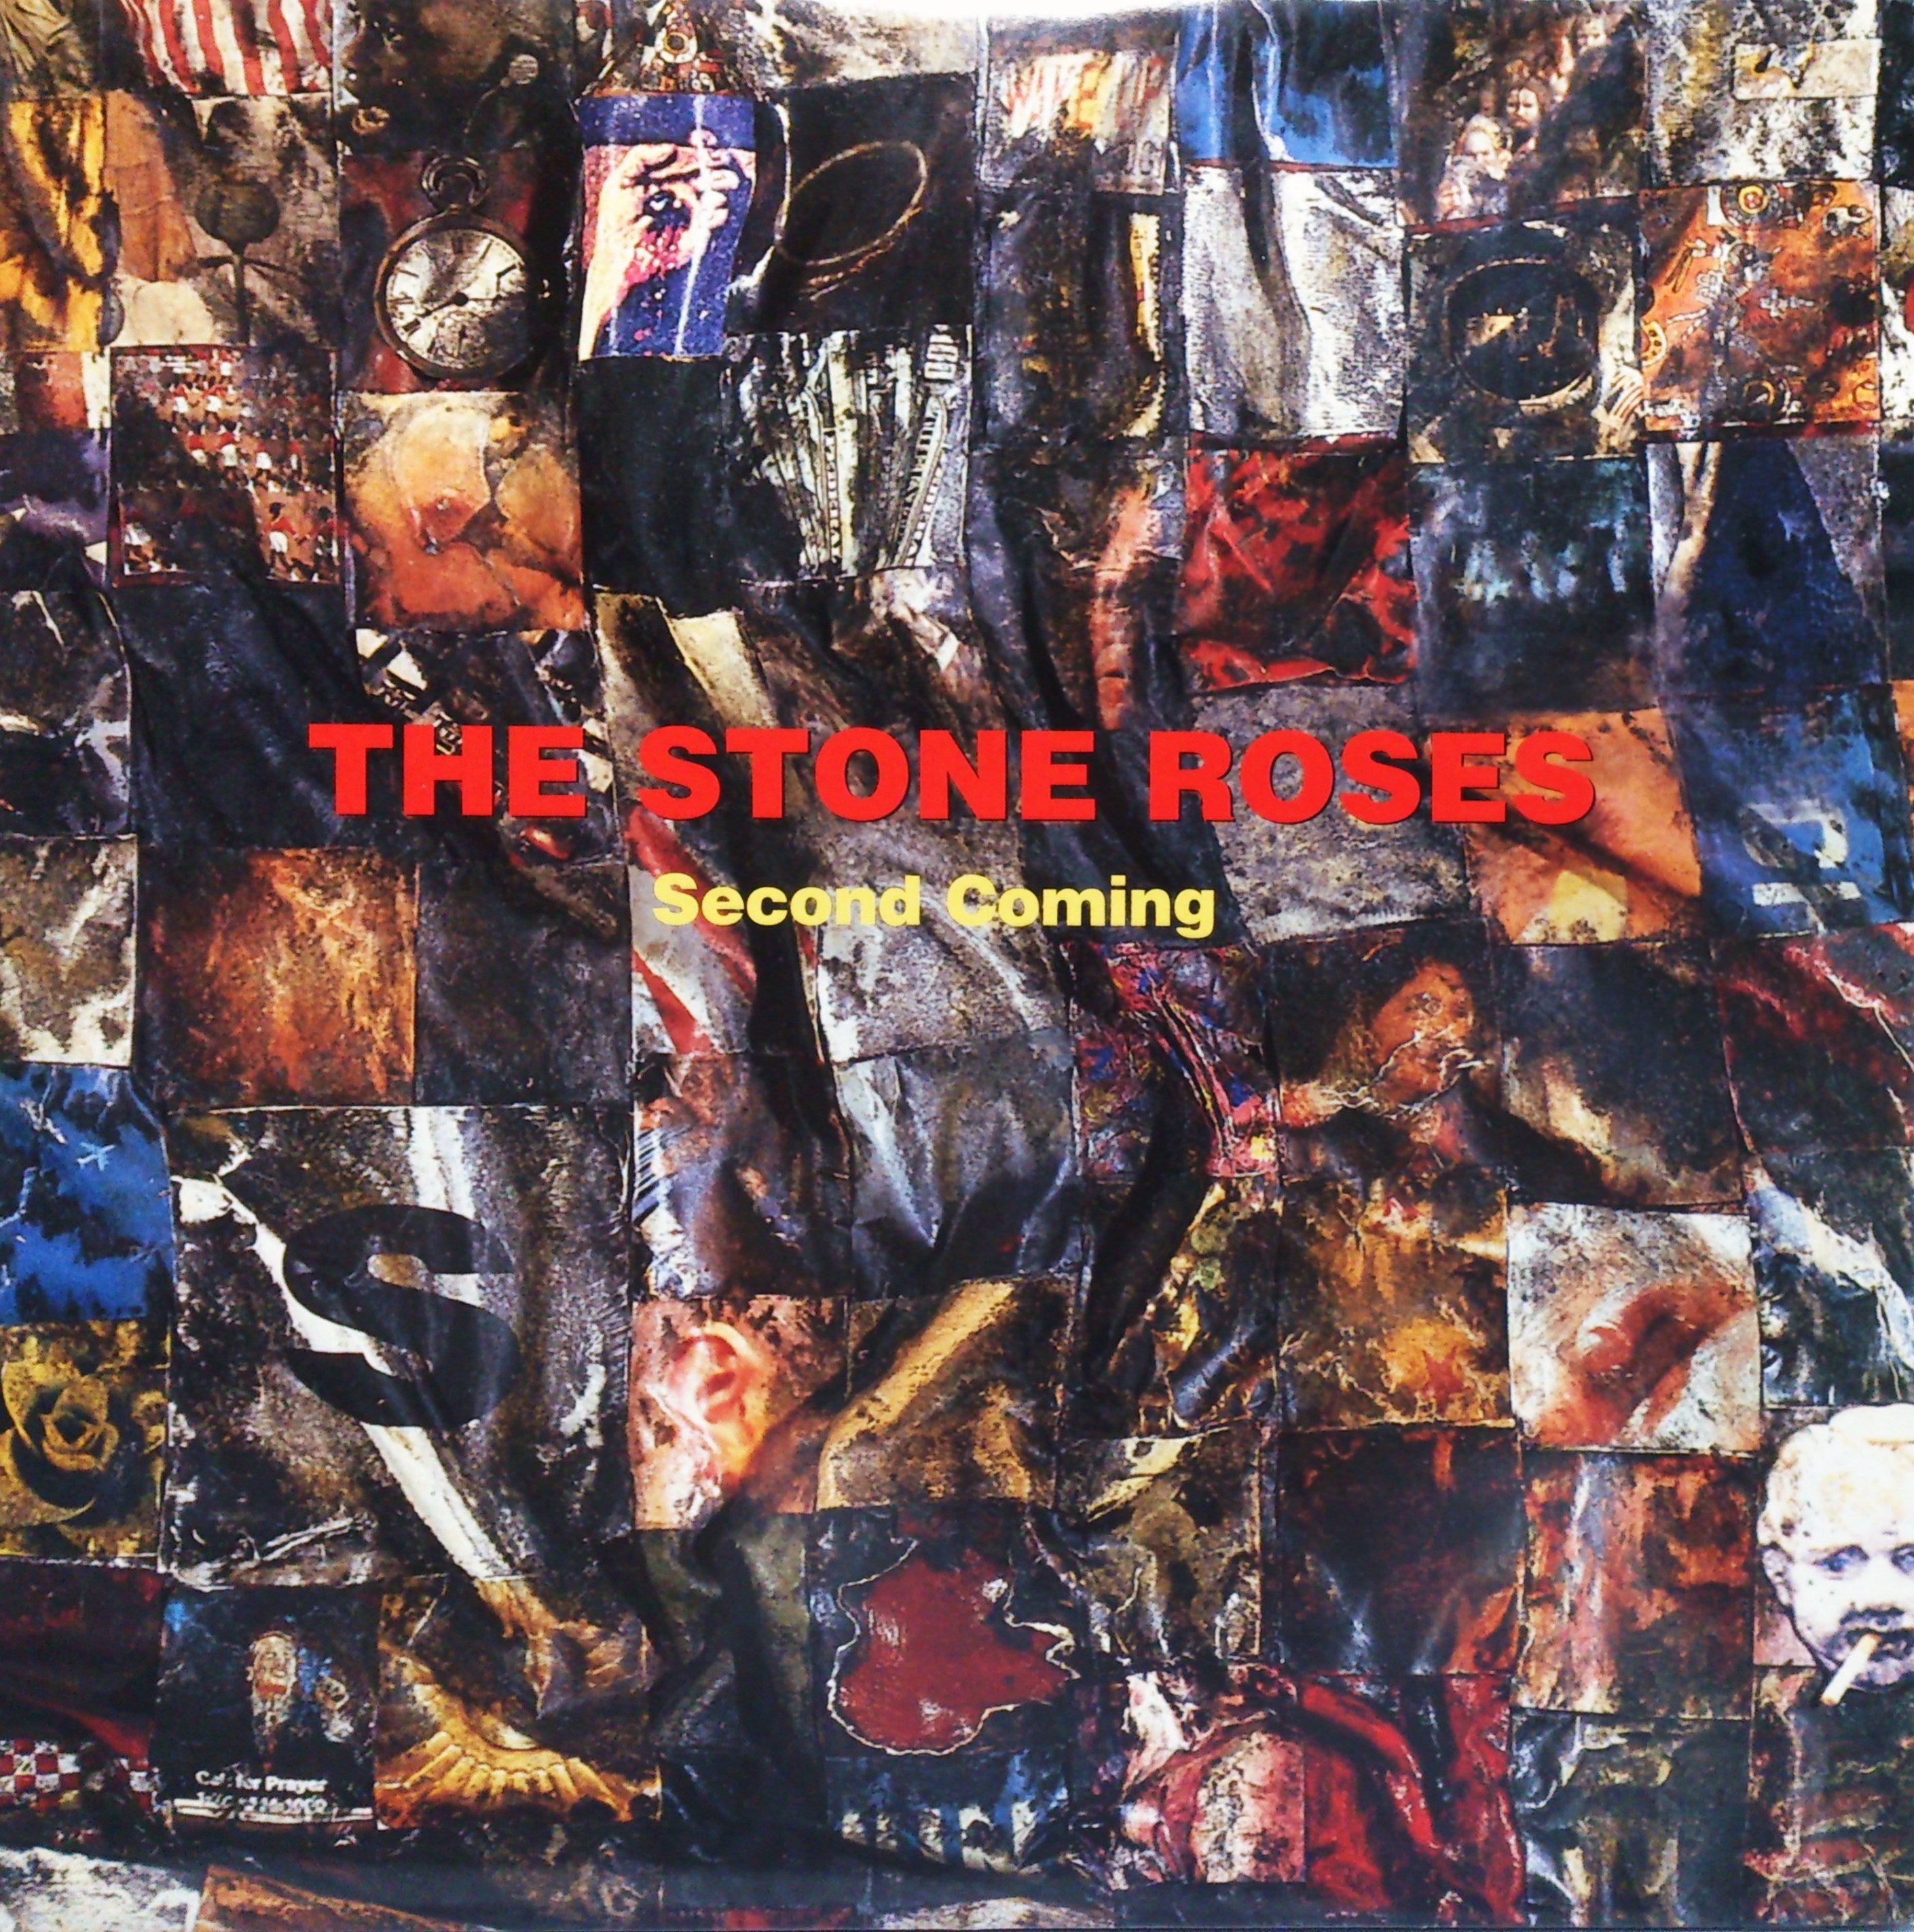 STONE ROSES オフィシャル『Second Coming』-UK LP- THE STONE ROSESのブログ